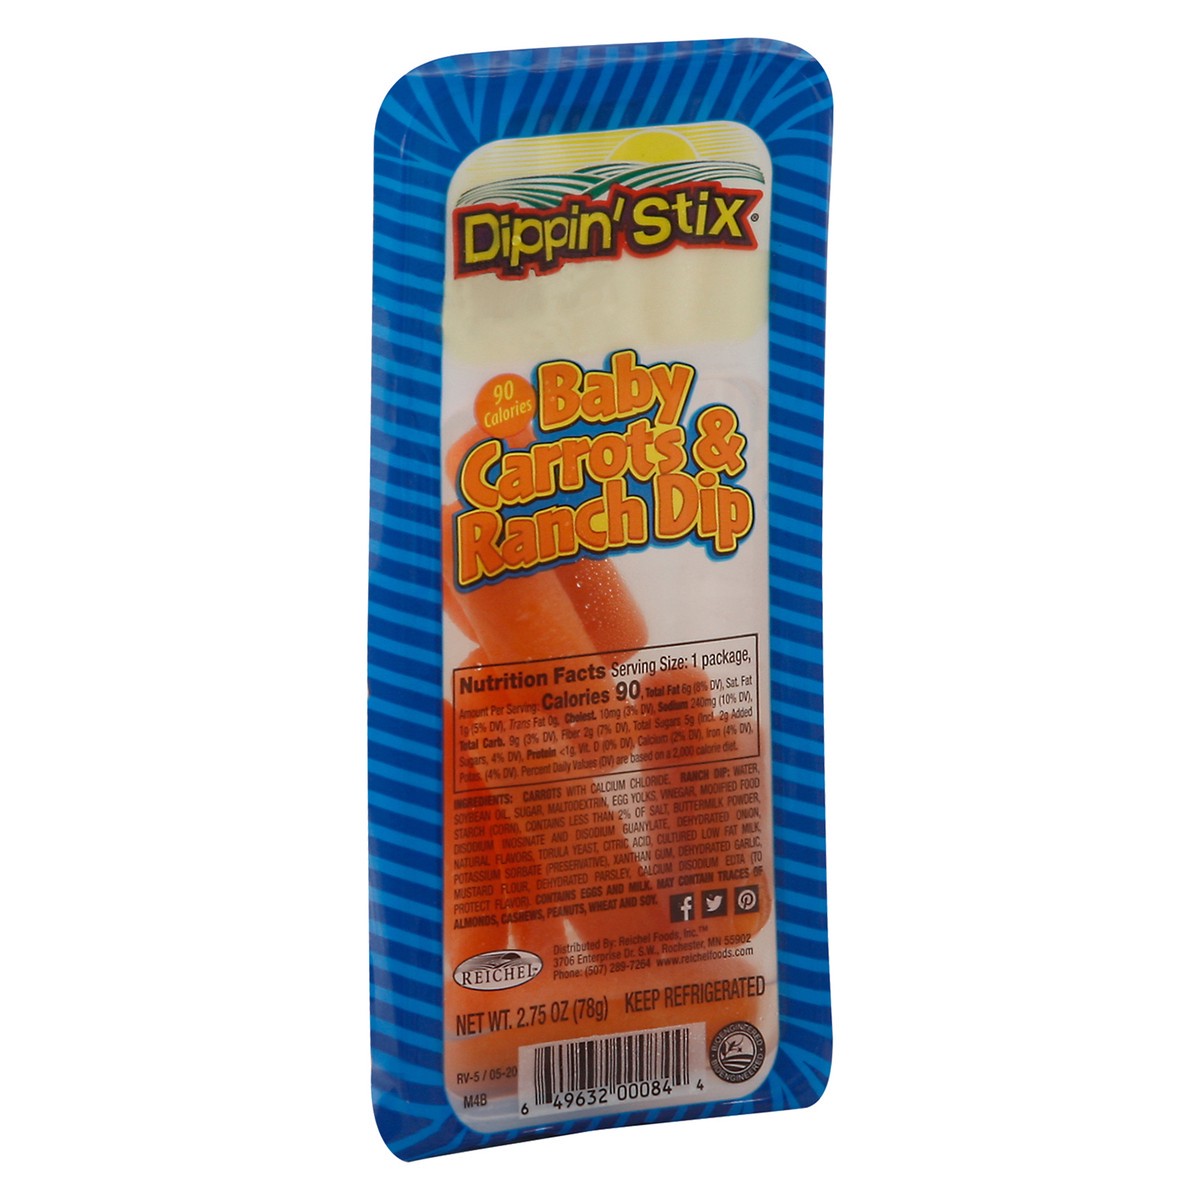 slide 2 of 9, Dippin'Stix Dippin' Stix Baby Carrots & Ranch Dip, 2.75oz, 2.75 oz